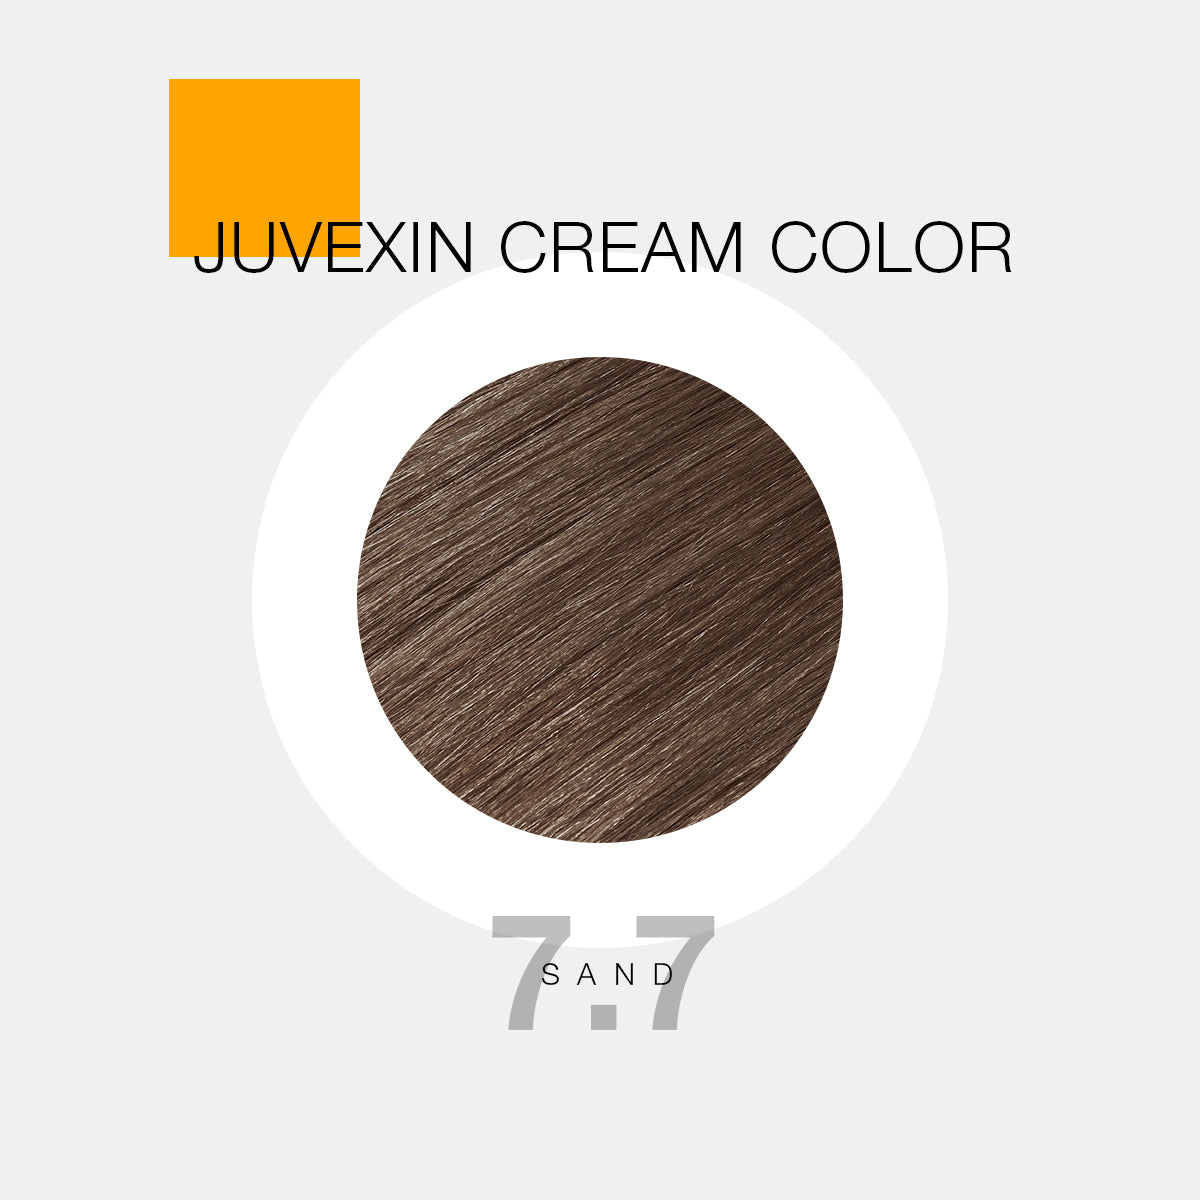 Juvexin Cream Color Pro Sand